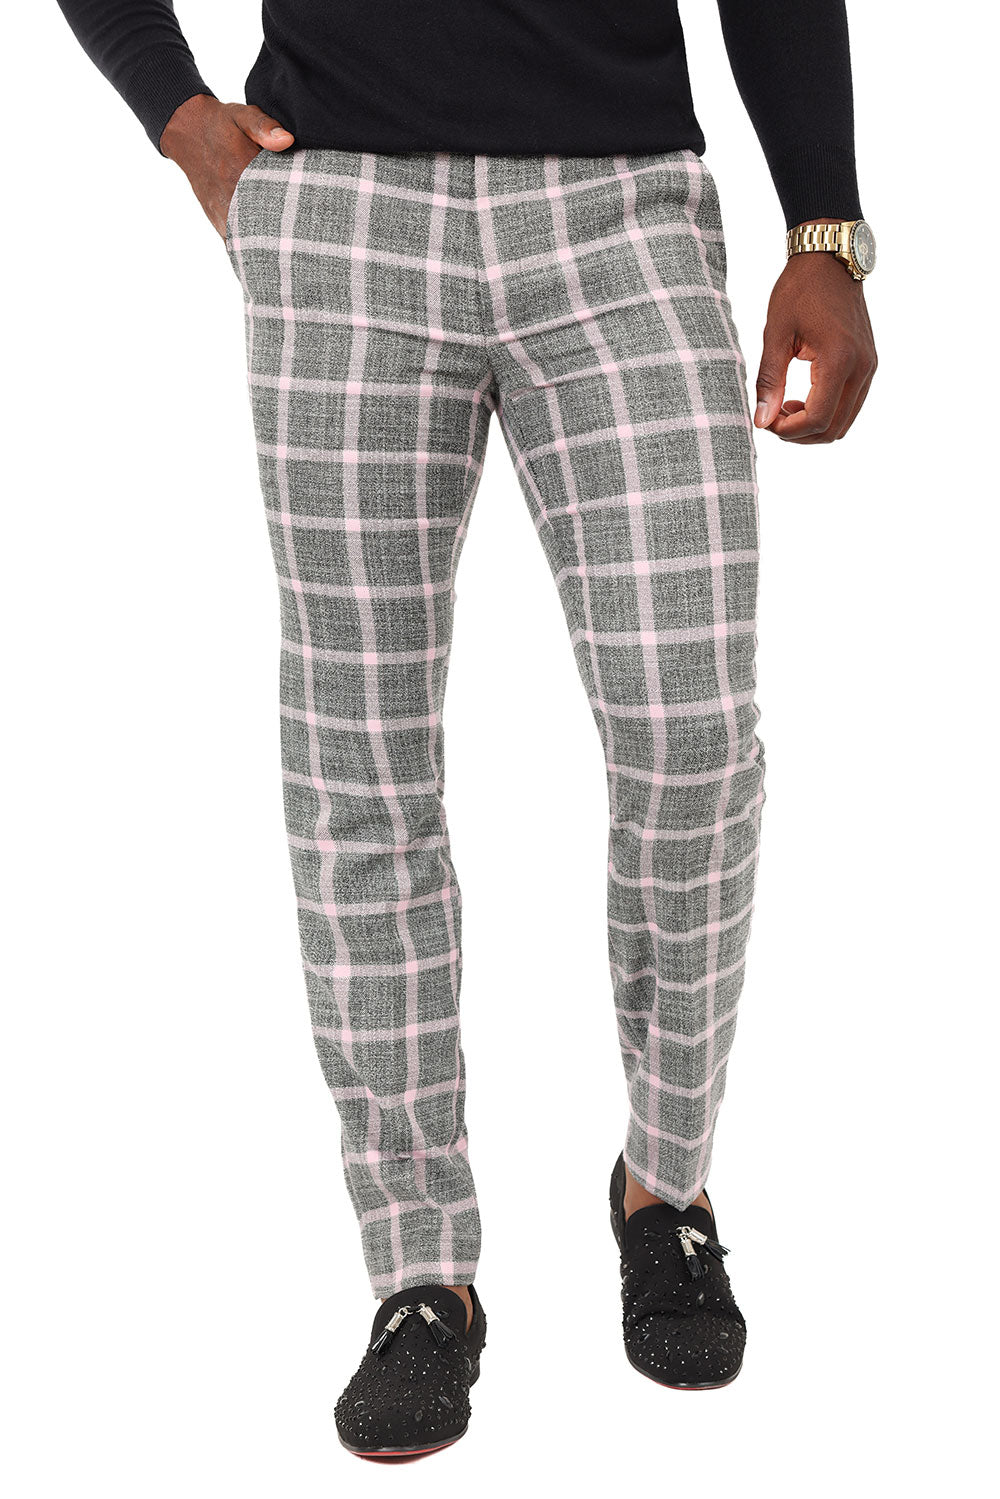 Barabas Men's Printed Checkered Plaid Design Chino Pants 2CP190 Grey Pink